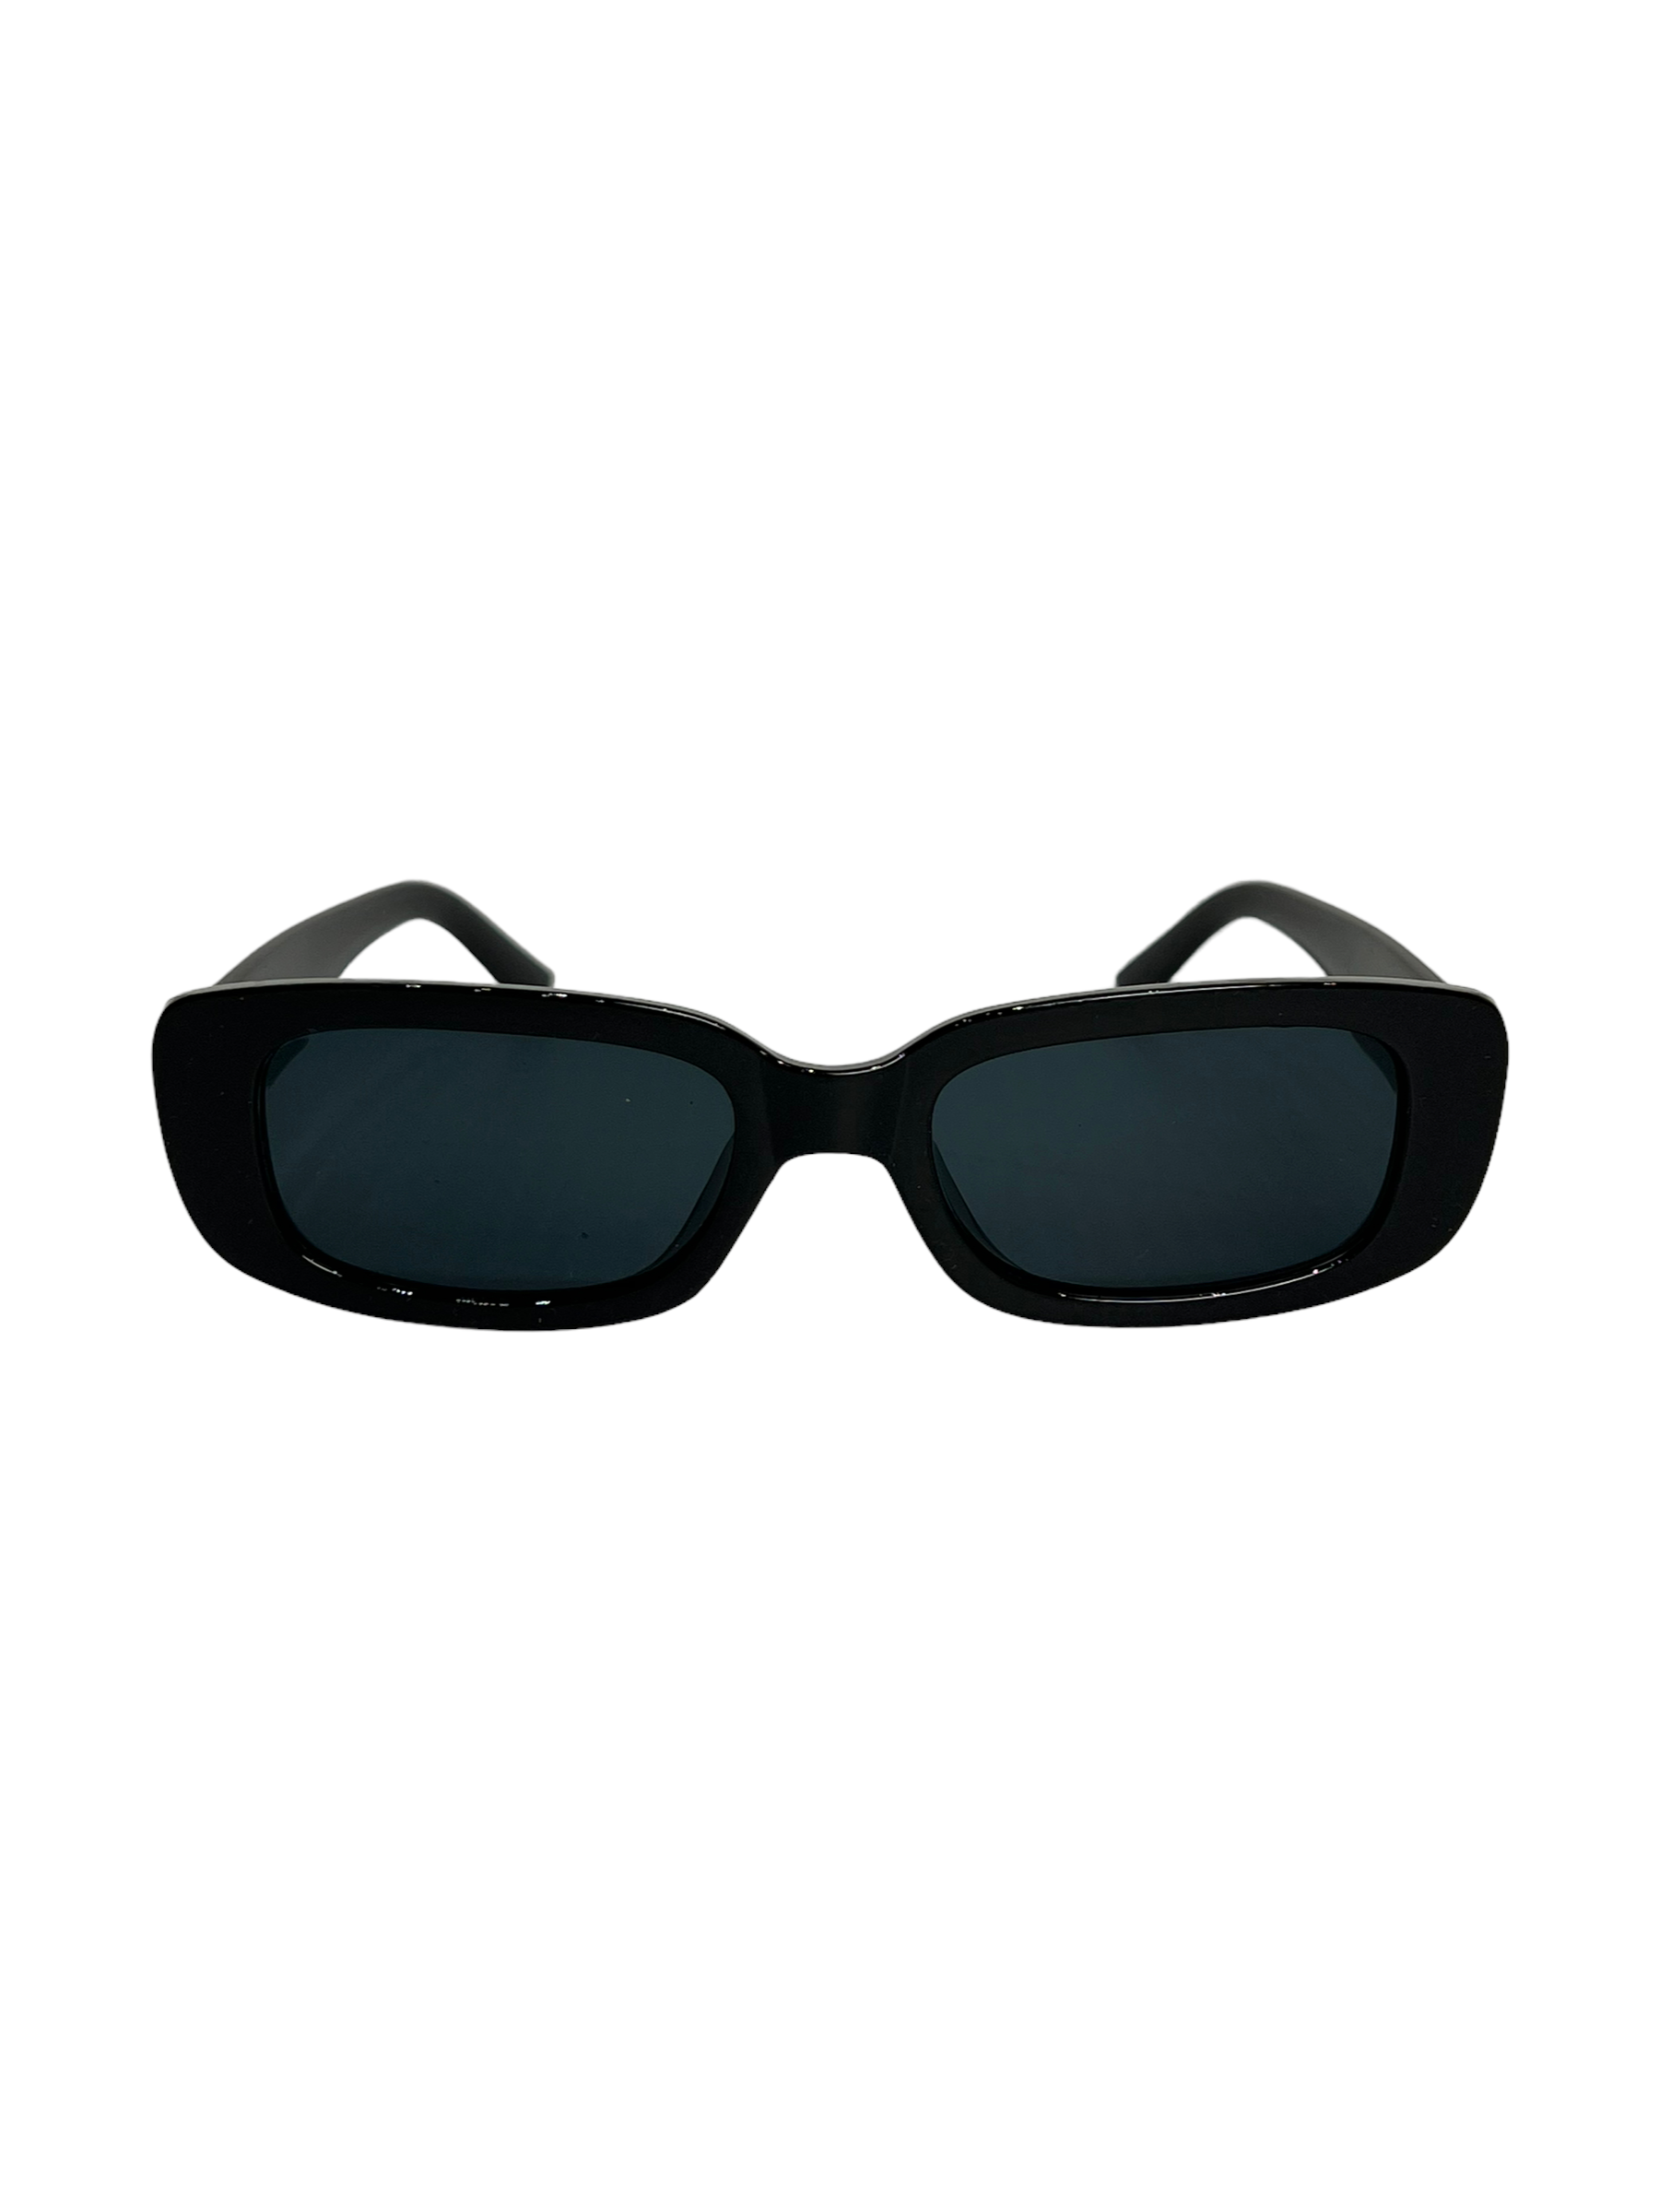 Stylish PRADA Sunglasses | Designer Shades from Italy